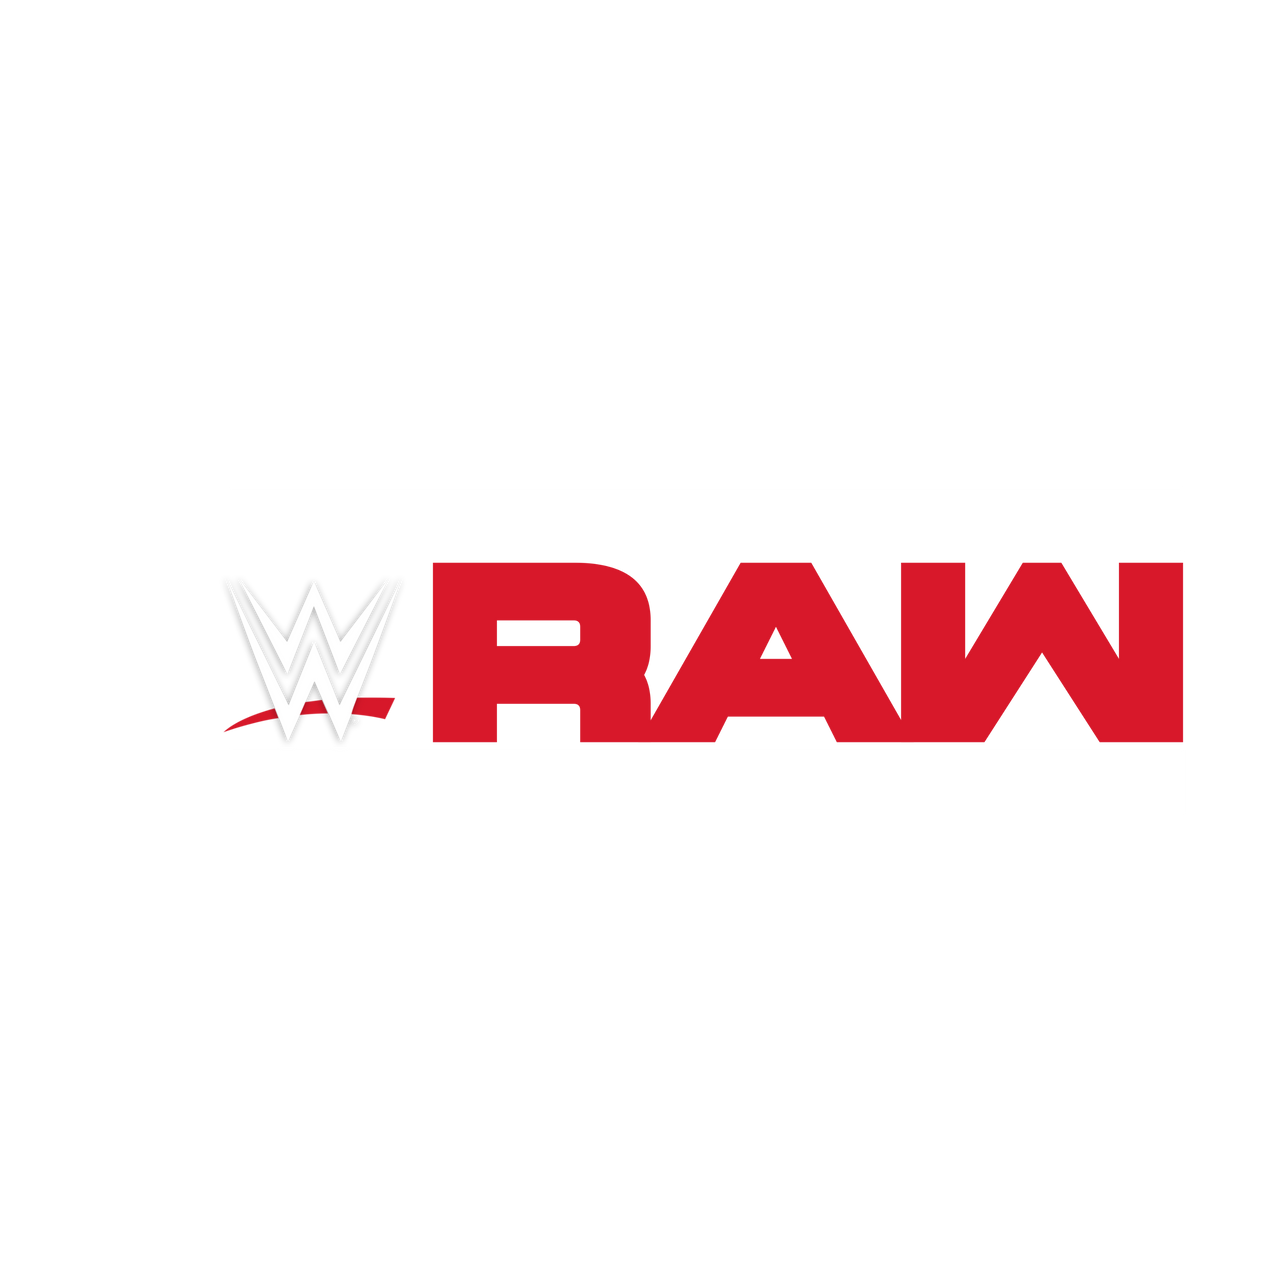 Custom Alternate Wwe Raw Logo By Beanz345 On Deviantart